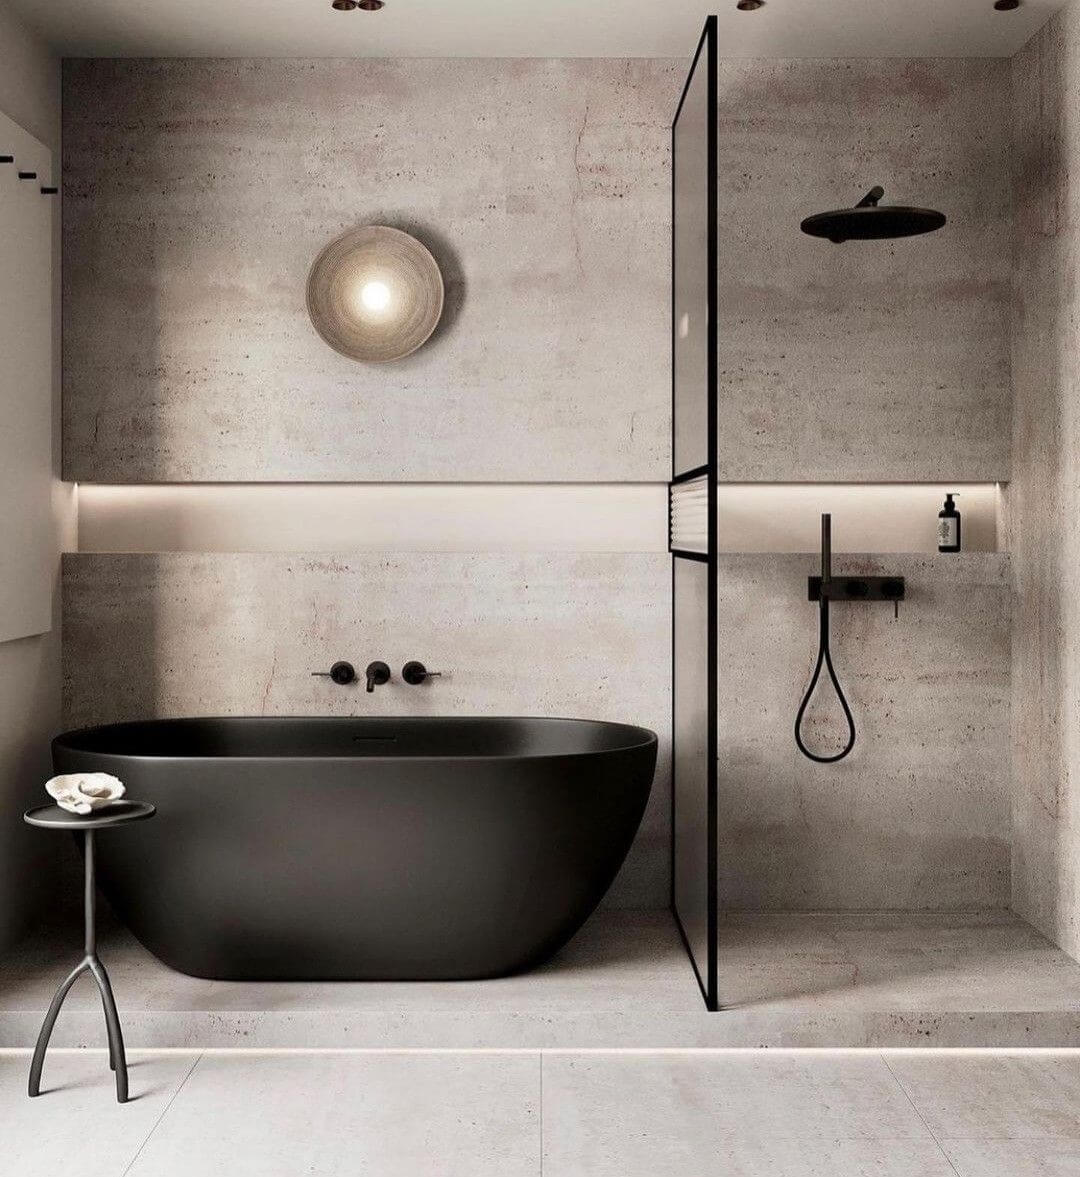 изящная в стиле минимализм ванная комната